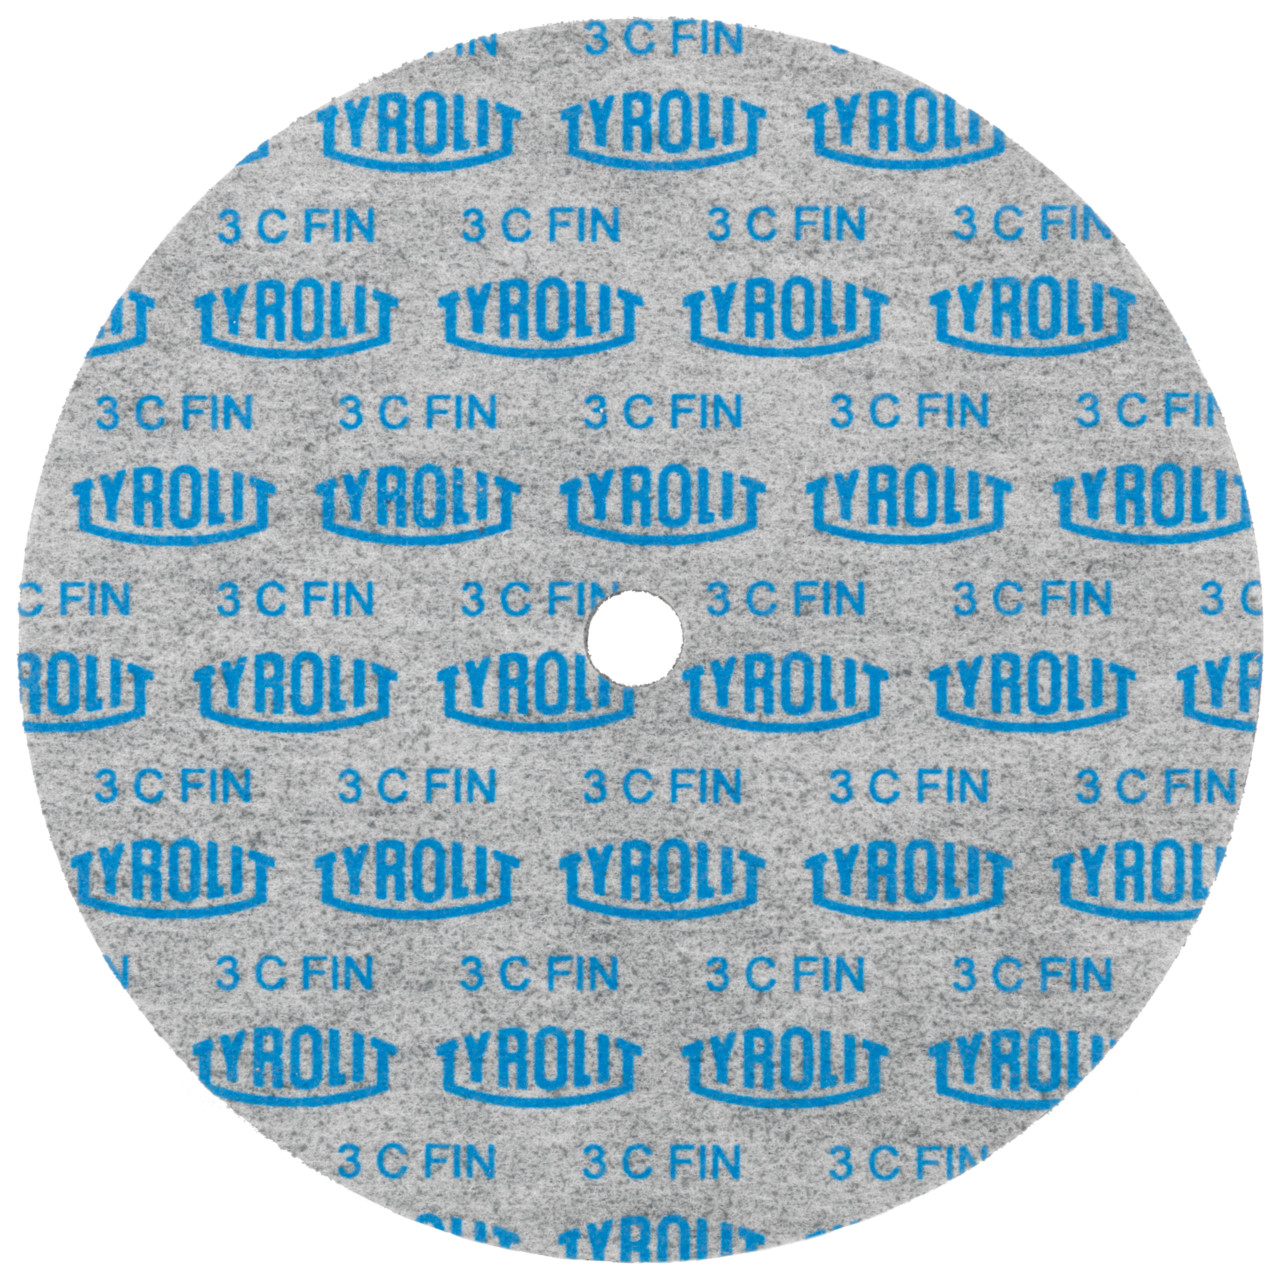 Tyrolit Discos compactos prensados DxDxH 152x25x25,4 Inserto universal, 2 C FEIN, forma: 1, Art. 34190305